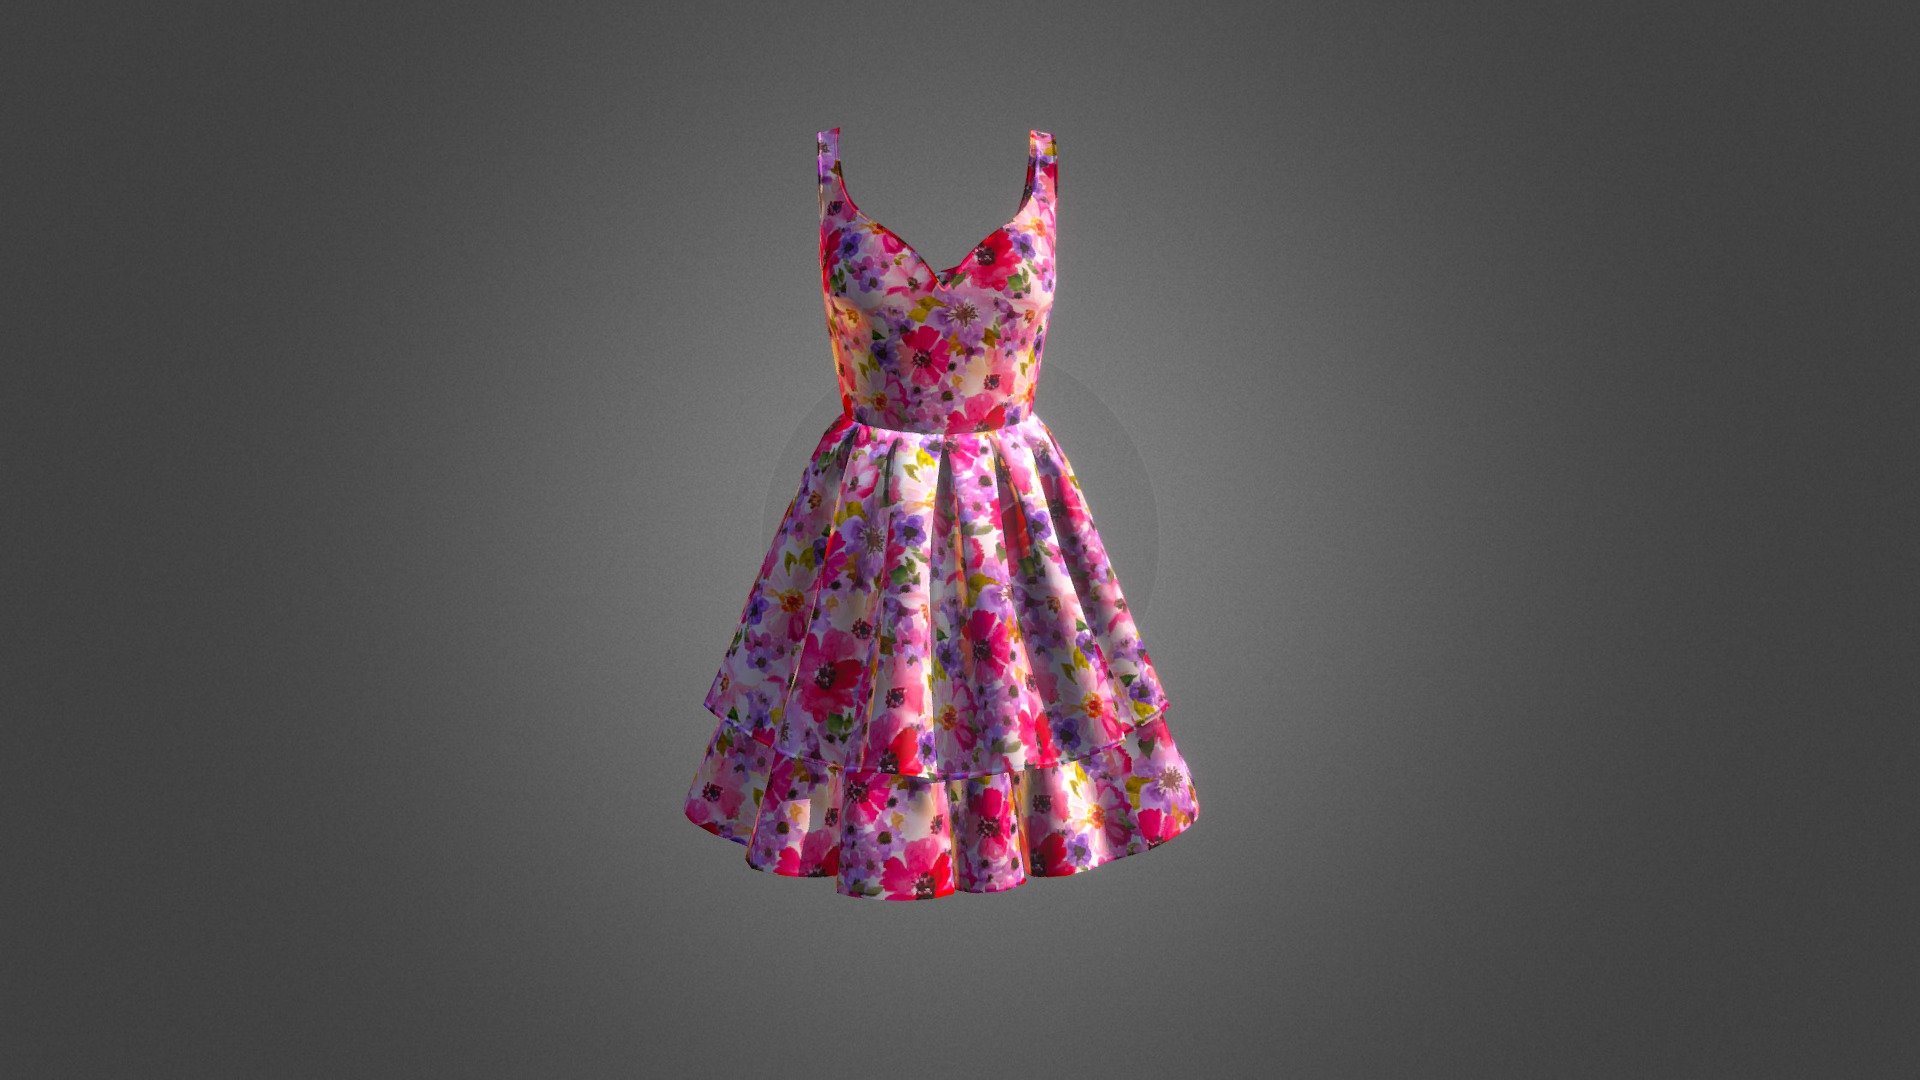 AboveKnee_Dress1 - 3D model by Sumeet Arora (@ls.rightbrain) 3d model